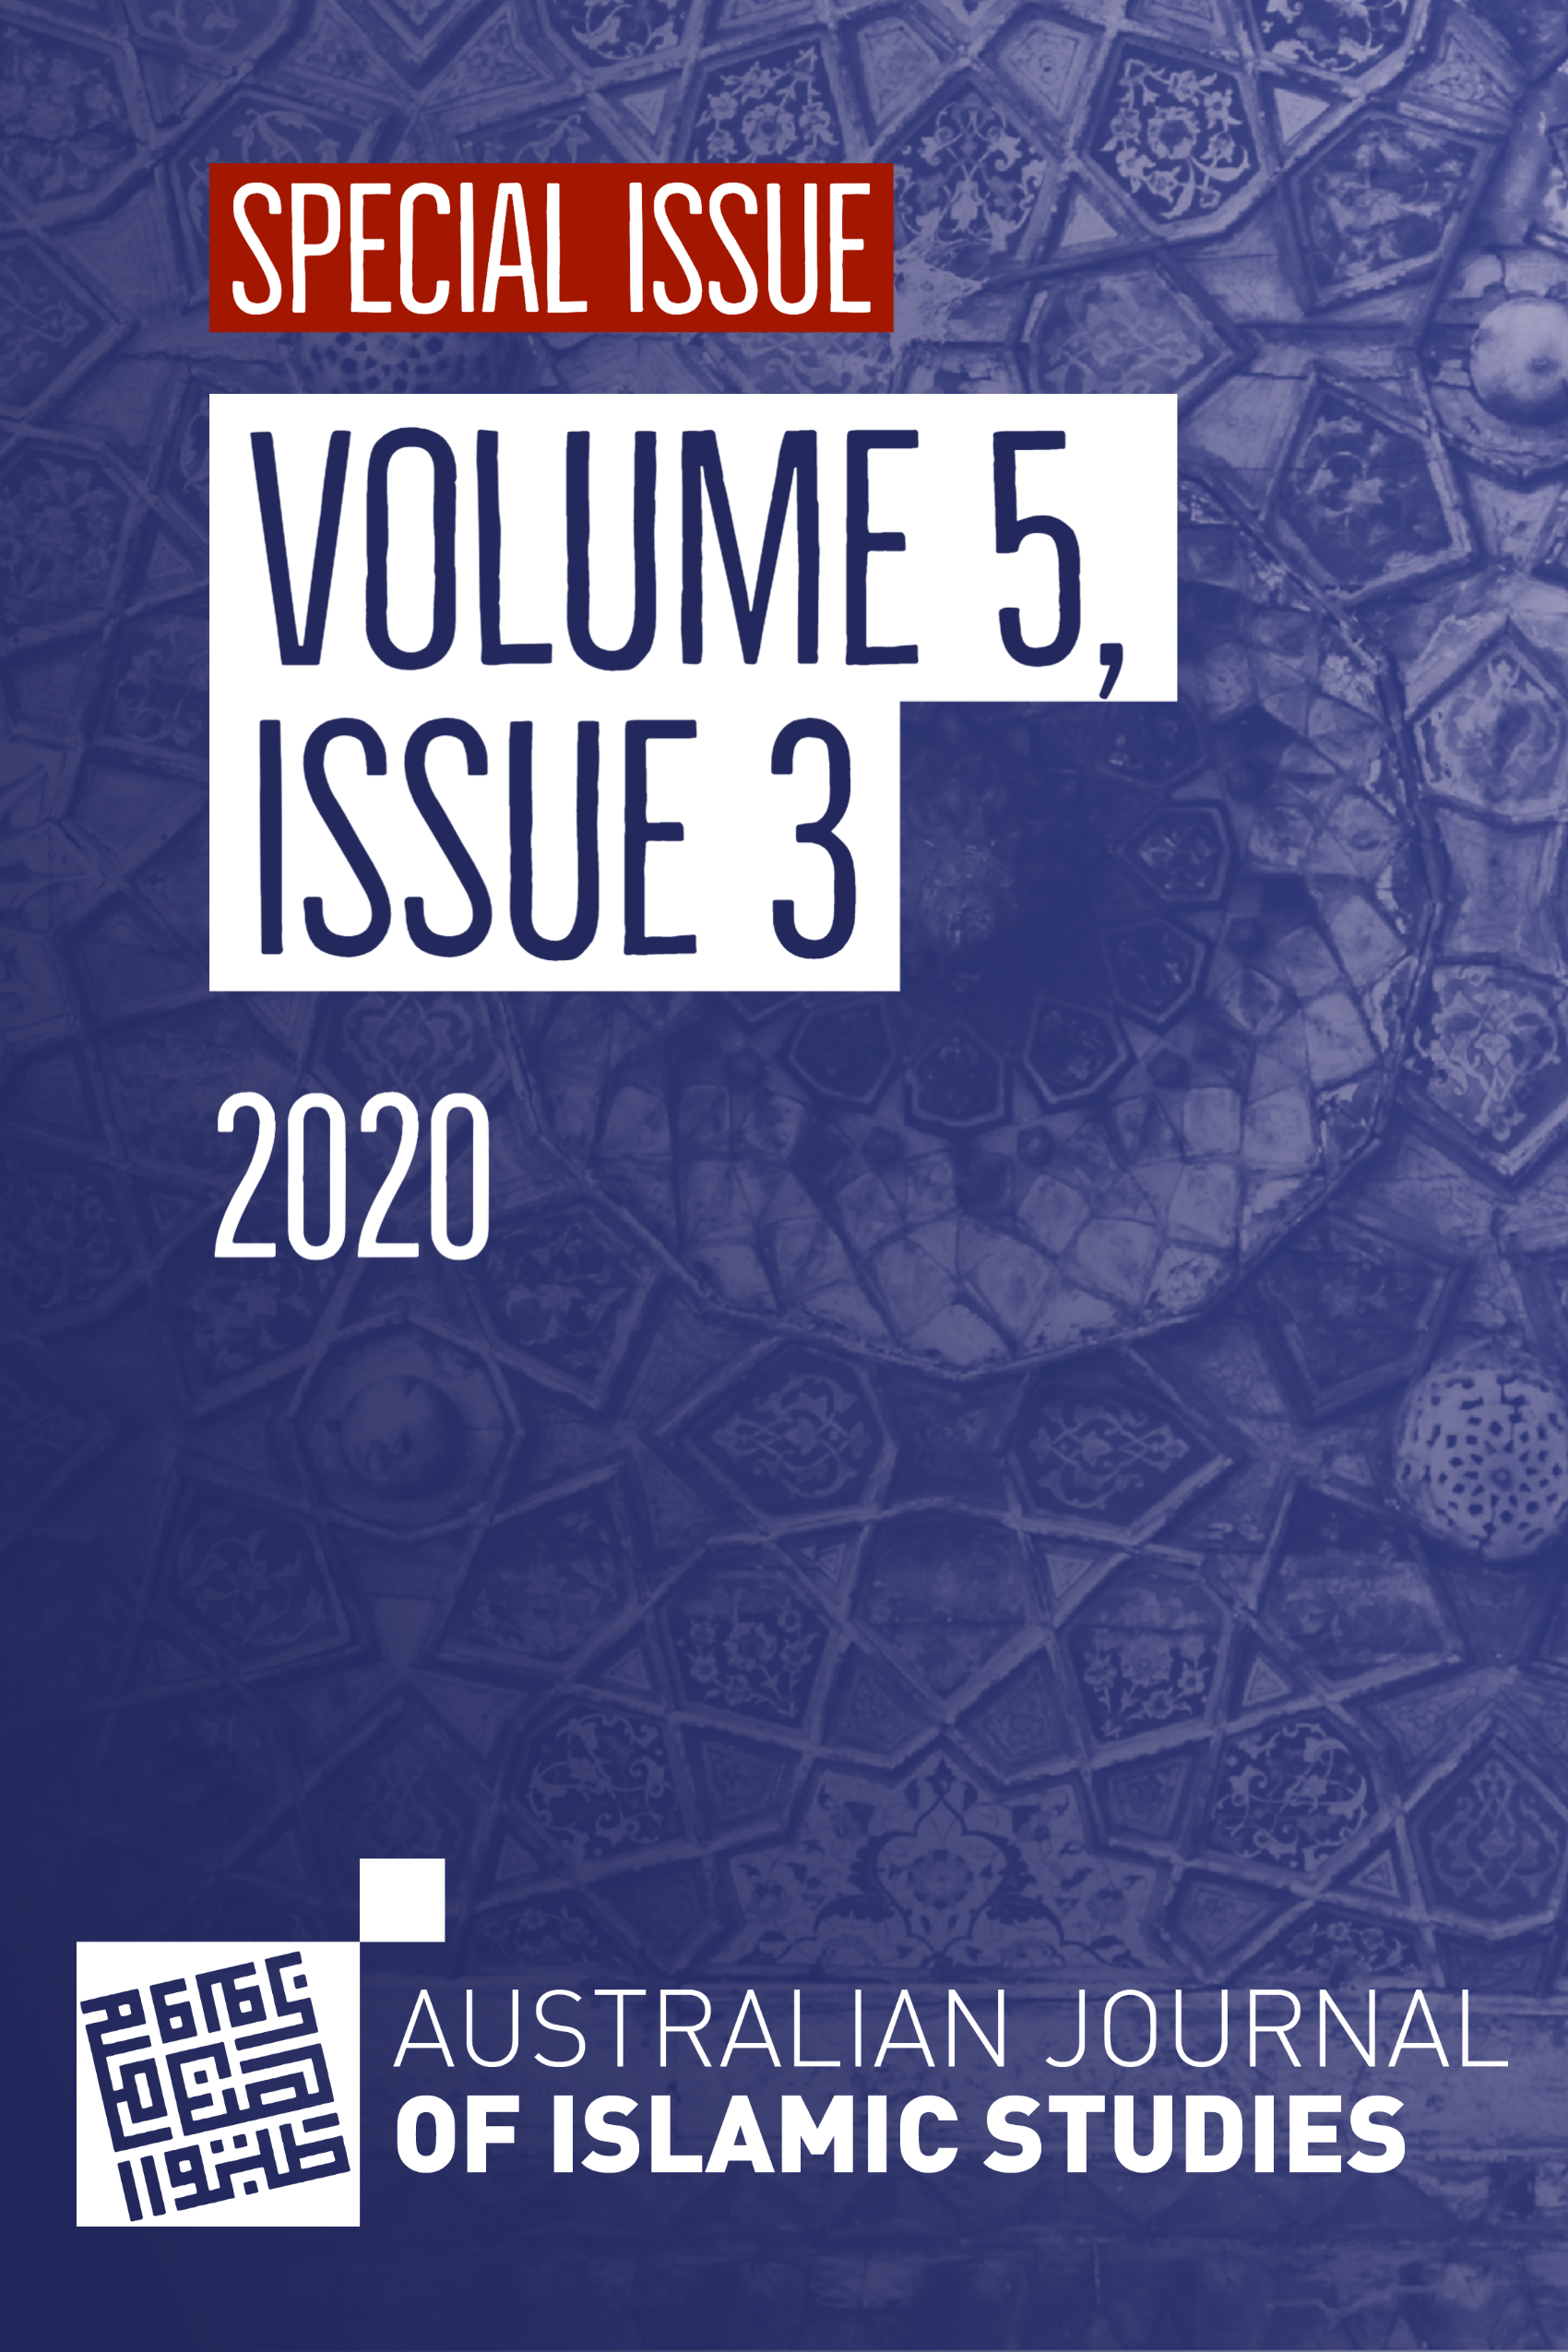 The Australian Journal of Islamic Studies